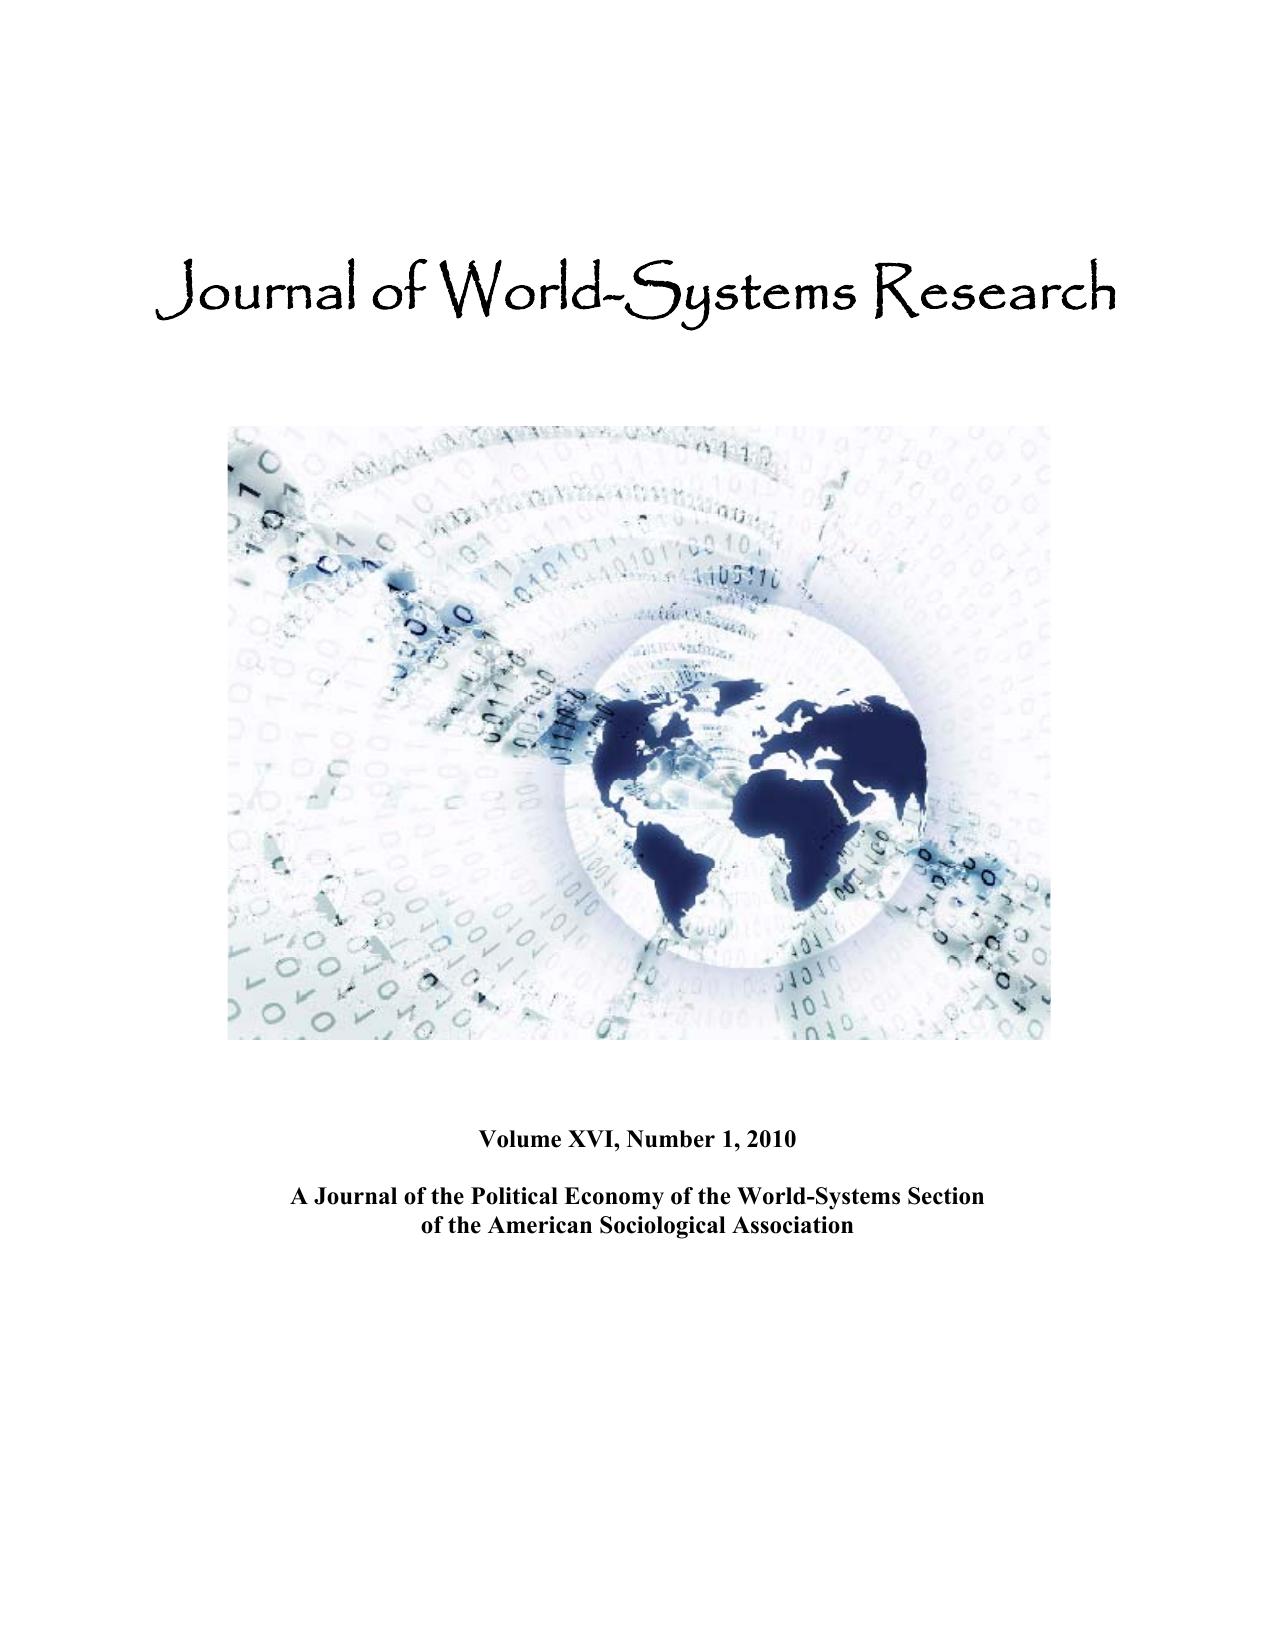 JWSR Volume XVI, Number 1, 2010